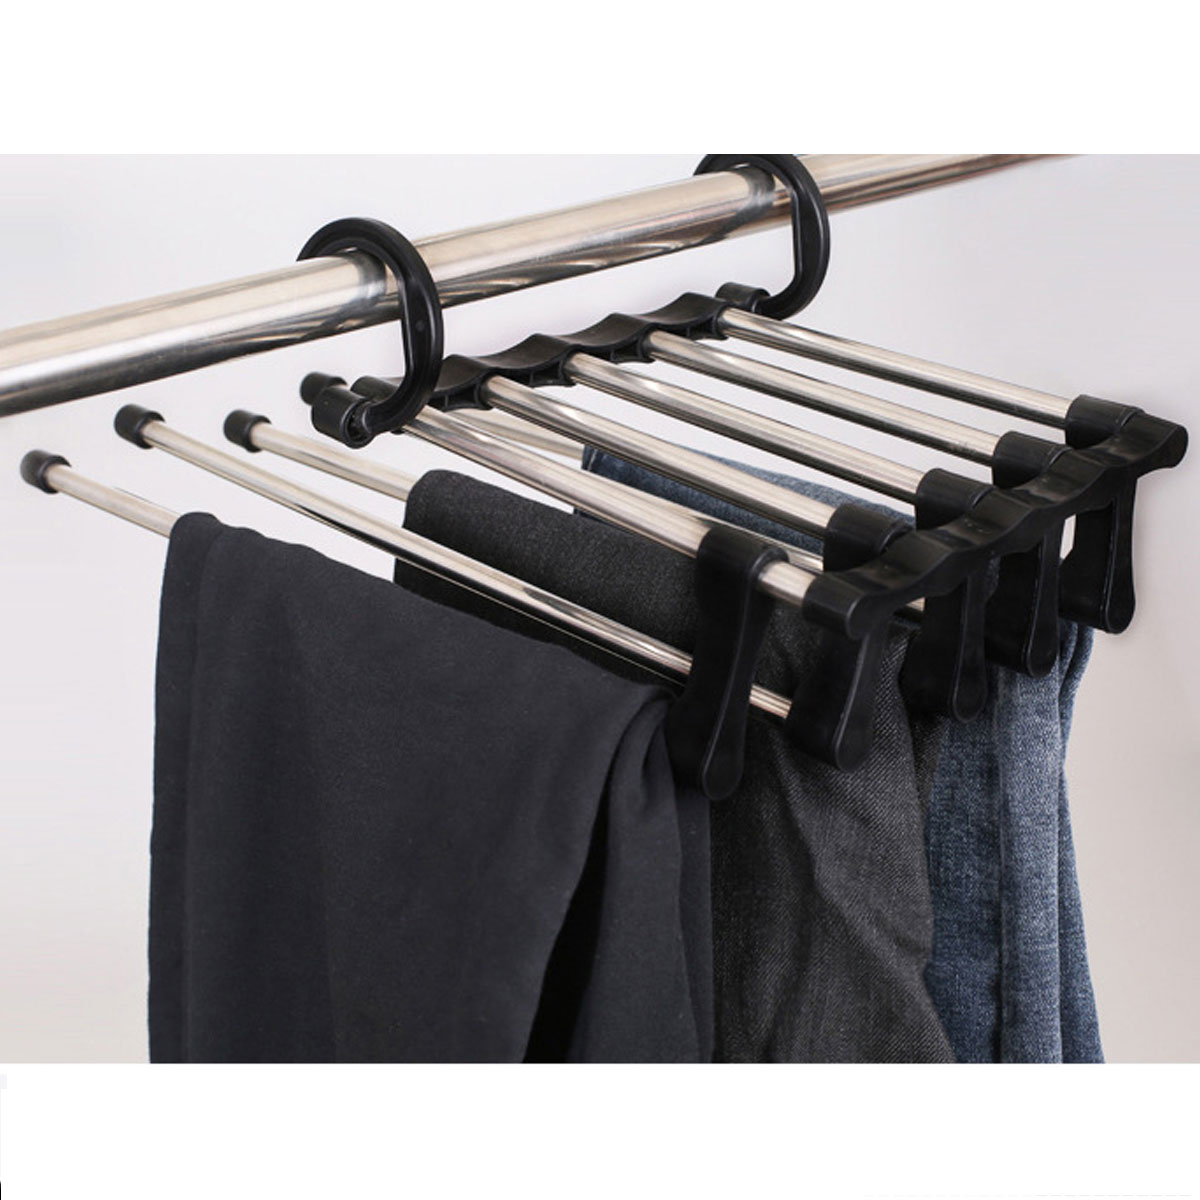 New-5in1-Adjustable-Closet-Organizer-Space-Saver-Trousers-Pants-Rack-Hanger-Hook-1756985-2